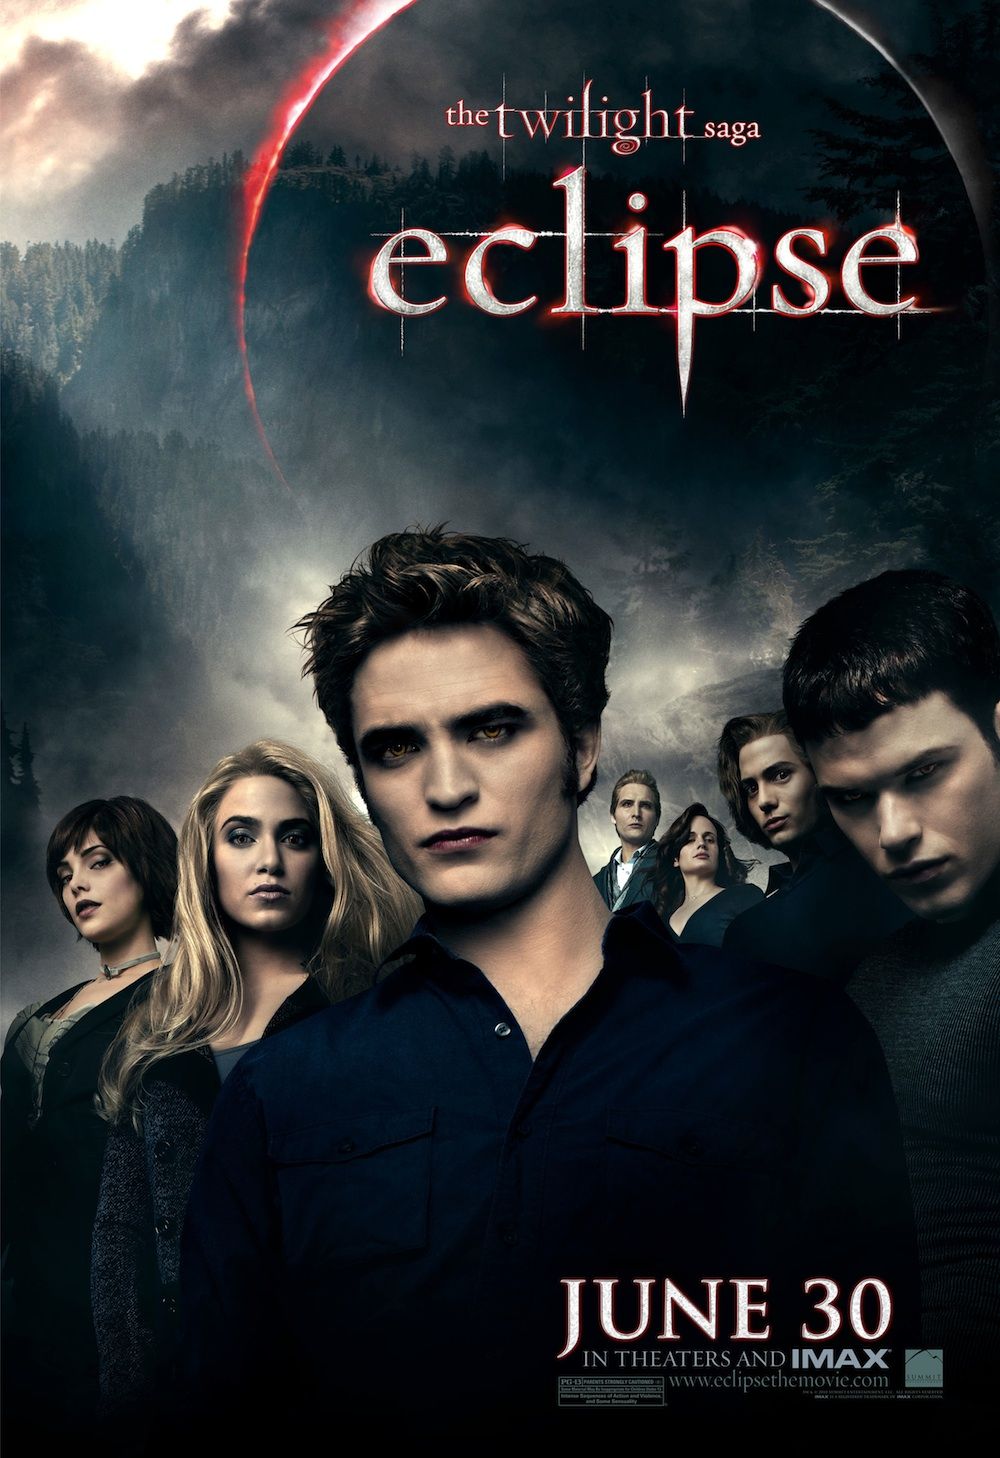 The Twilight Saga Eclipse (7 of 11) Extra Large Movie Poster Image